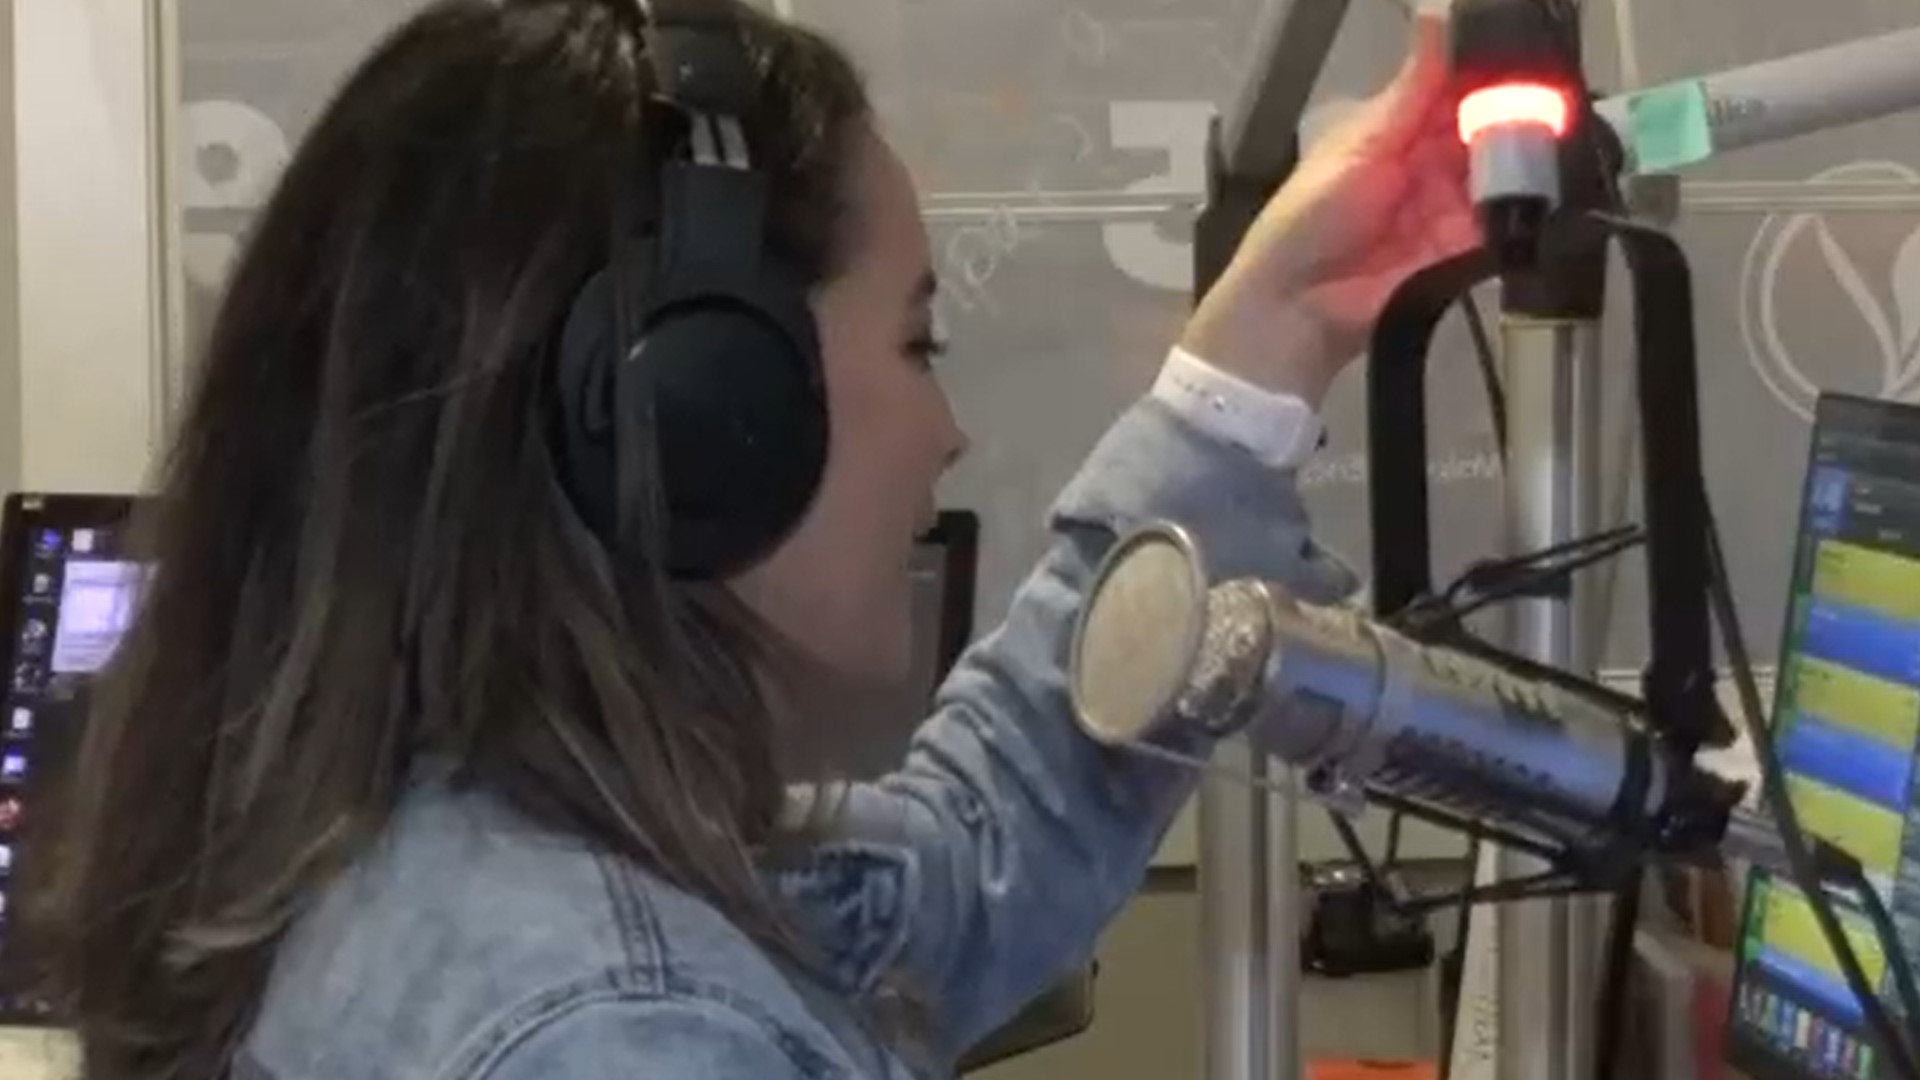 Spanish Christian radio station connects families across East Texas